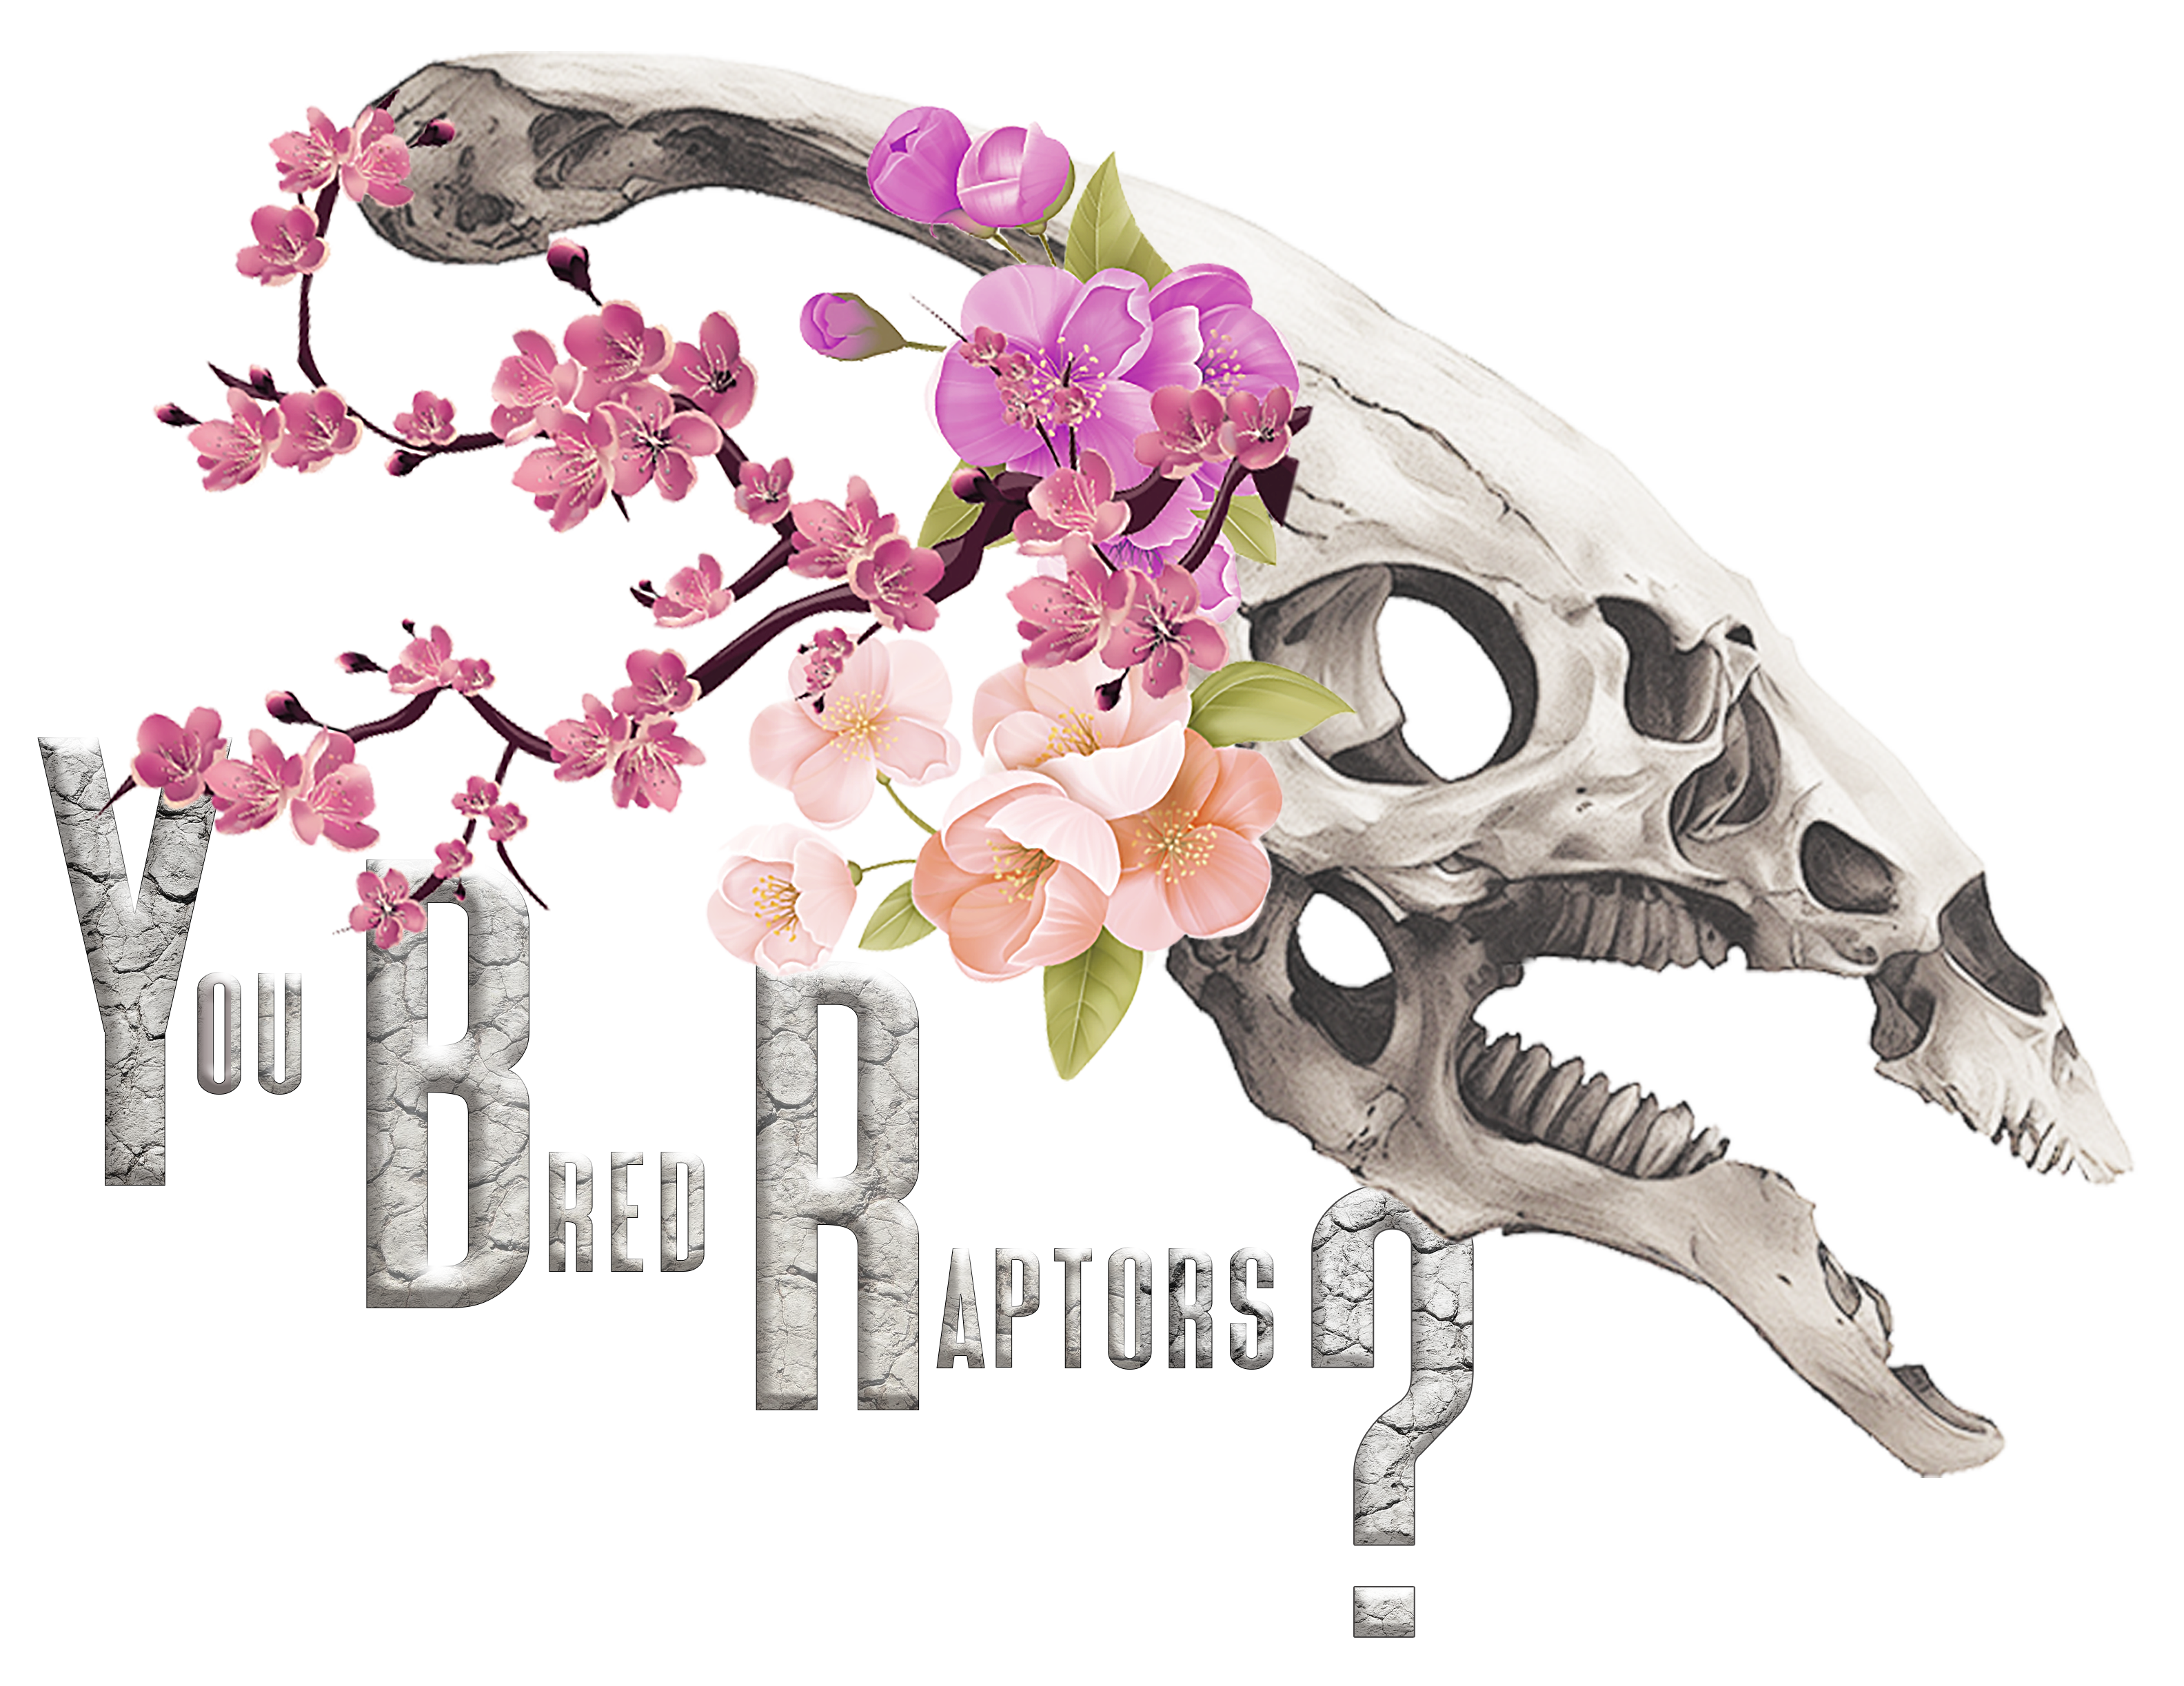 You Bred Raptors?